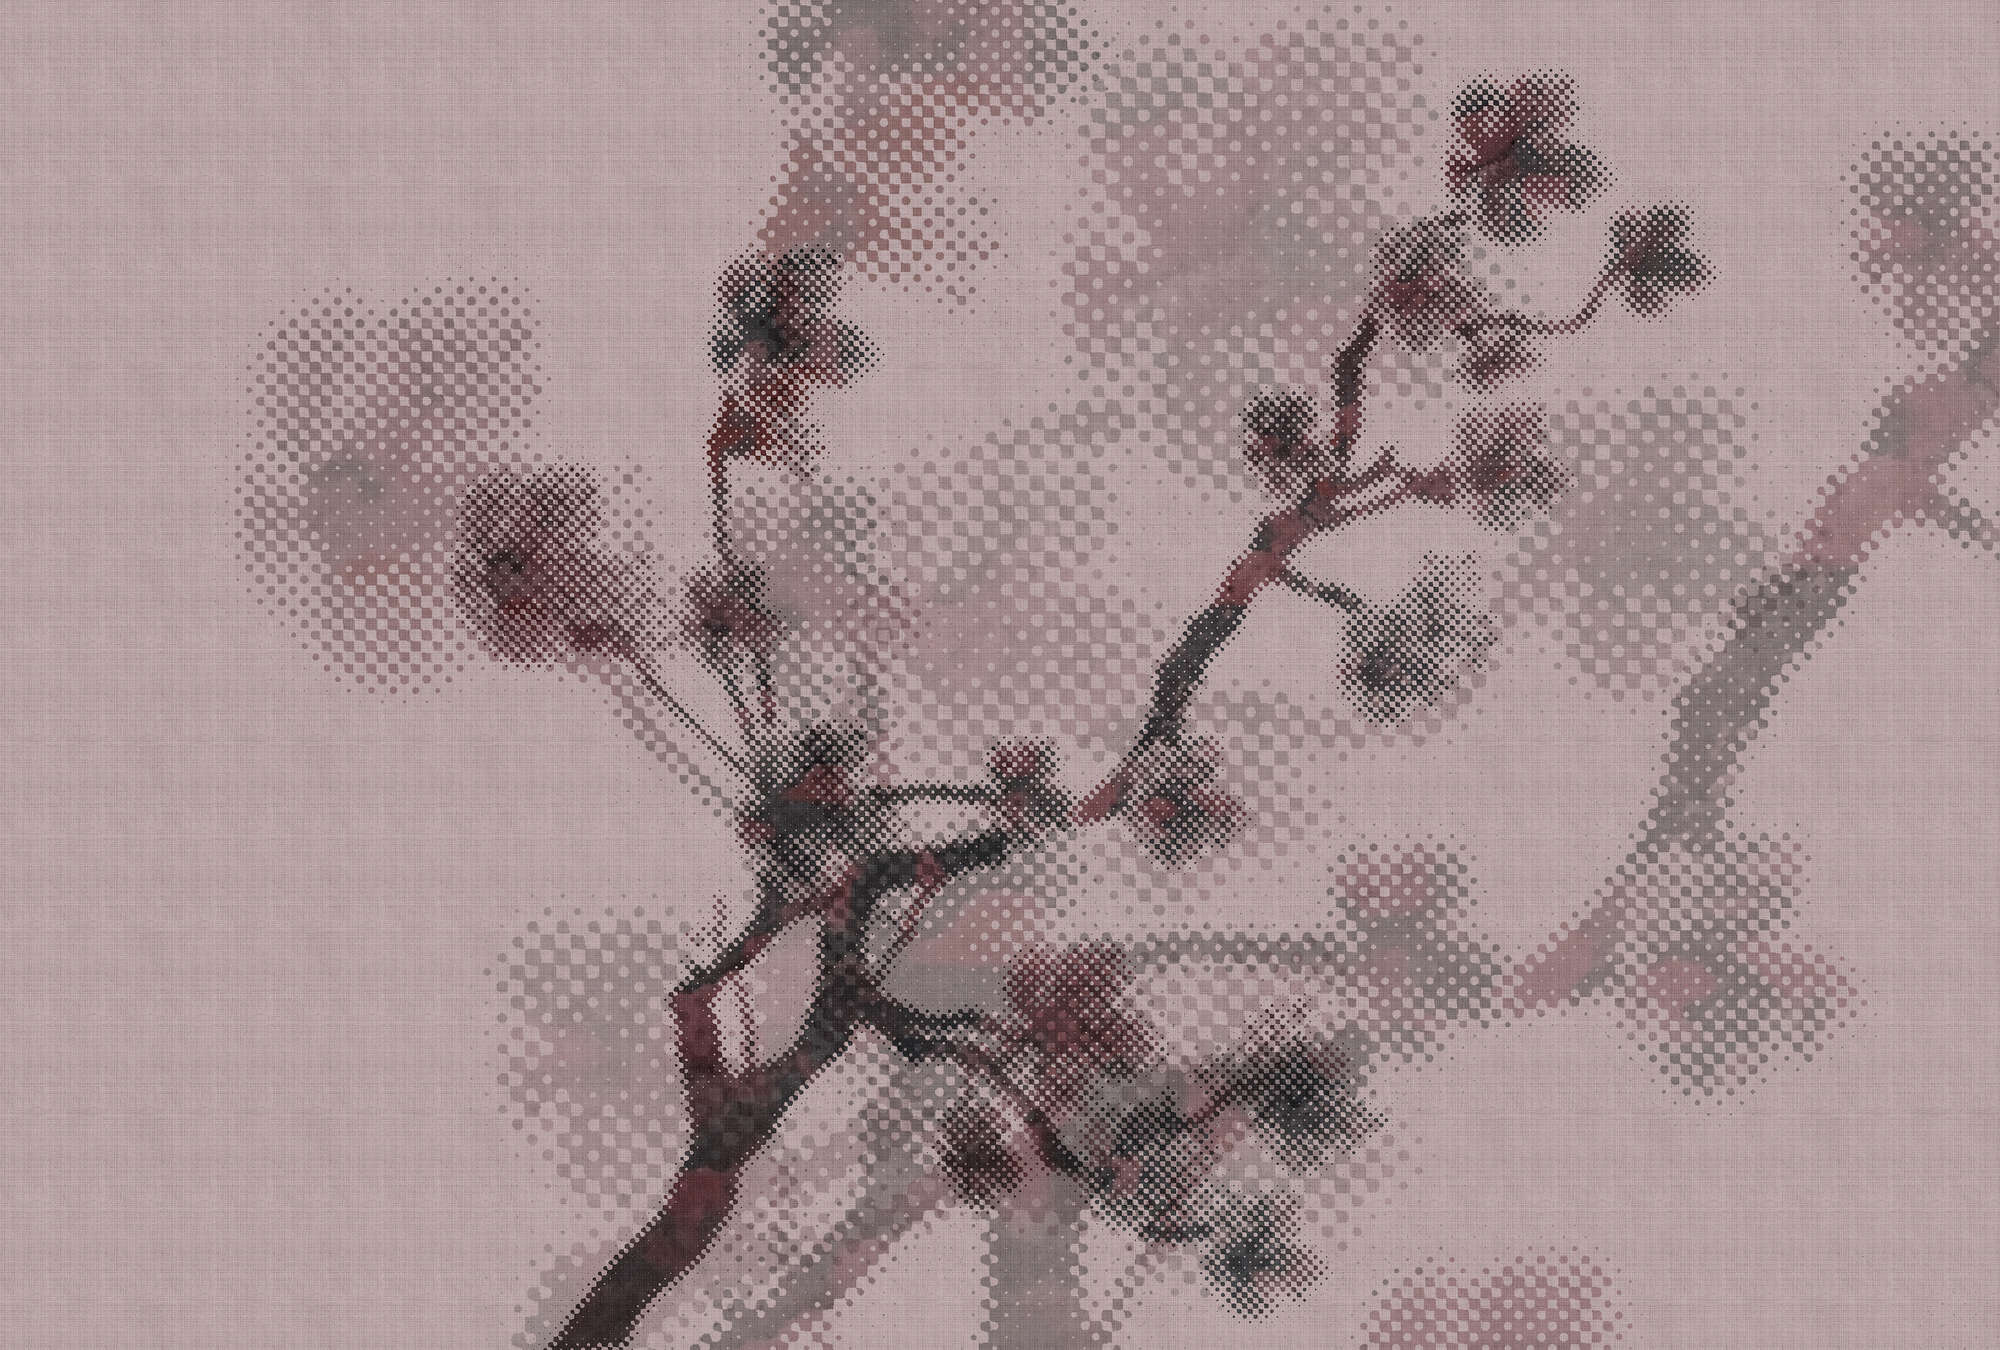             Twigs 3 - Fototapete mit Natur- Motiv & Pixeldesign - naturleinen Struktur – Rosa | Premium Glattvlies
        